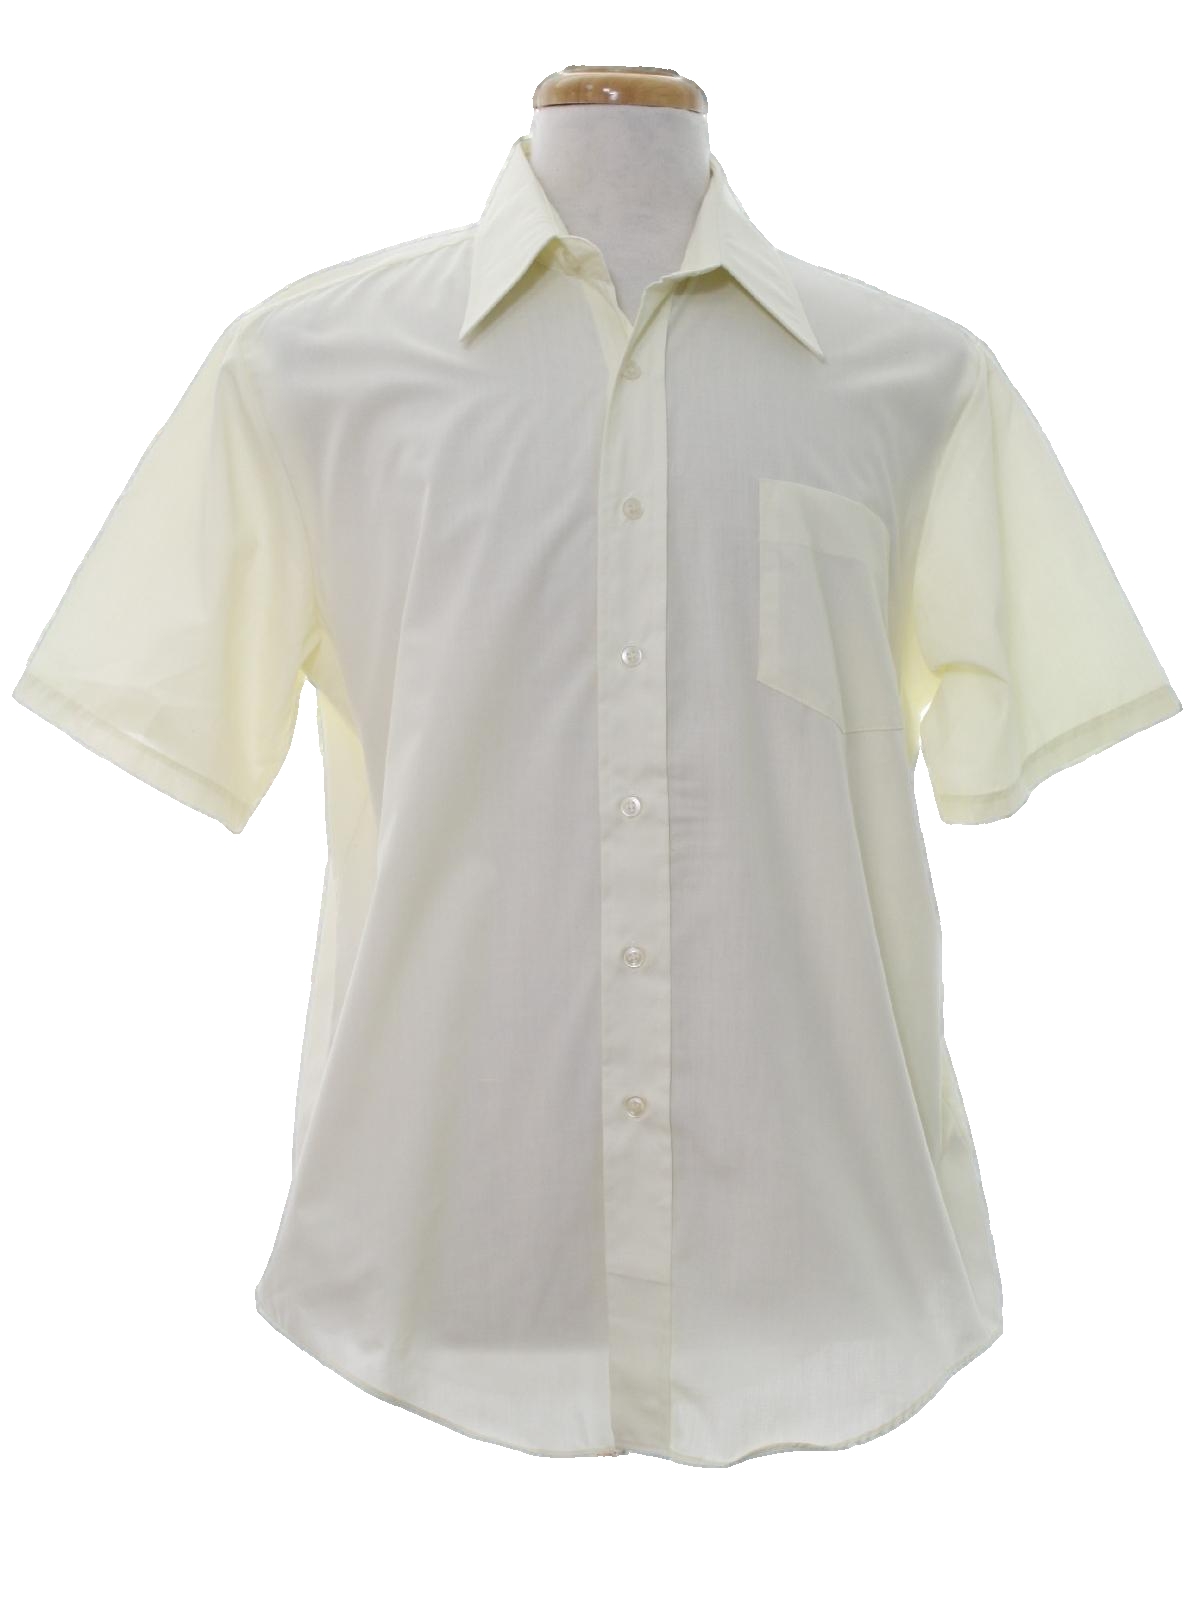 Retro 60s Shirt (J C Penney) : Late 60s -J C Penney- Mens cream ...